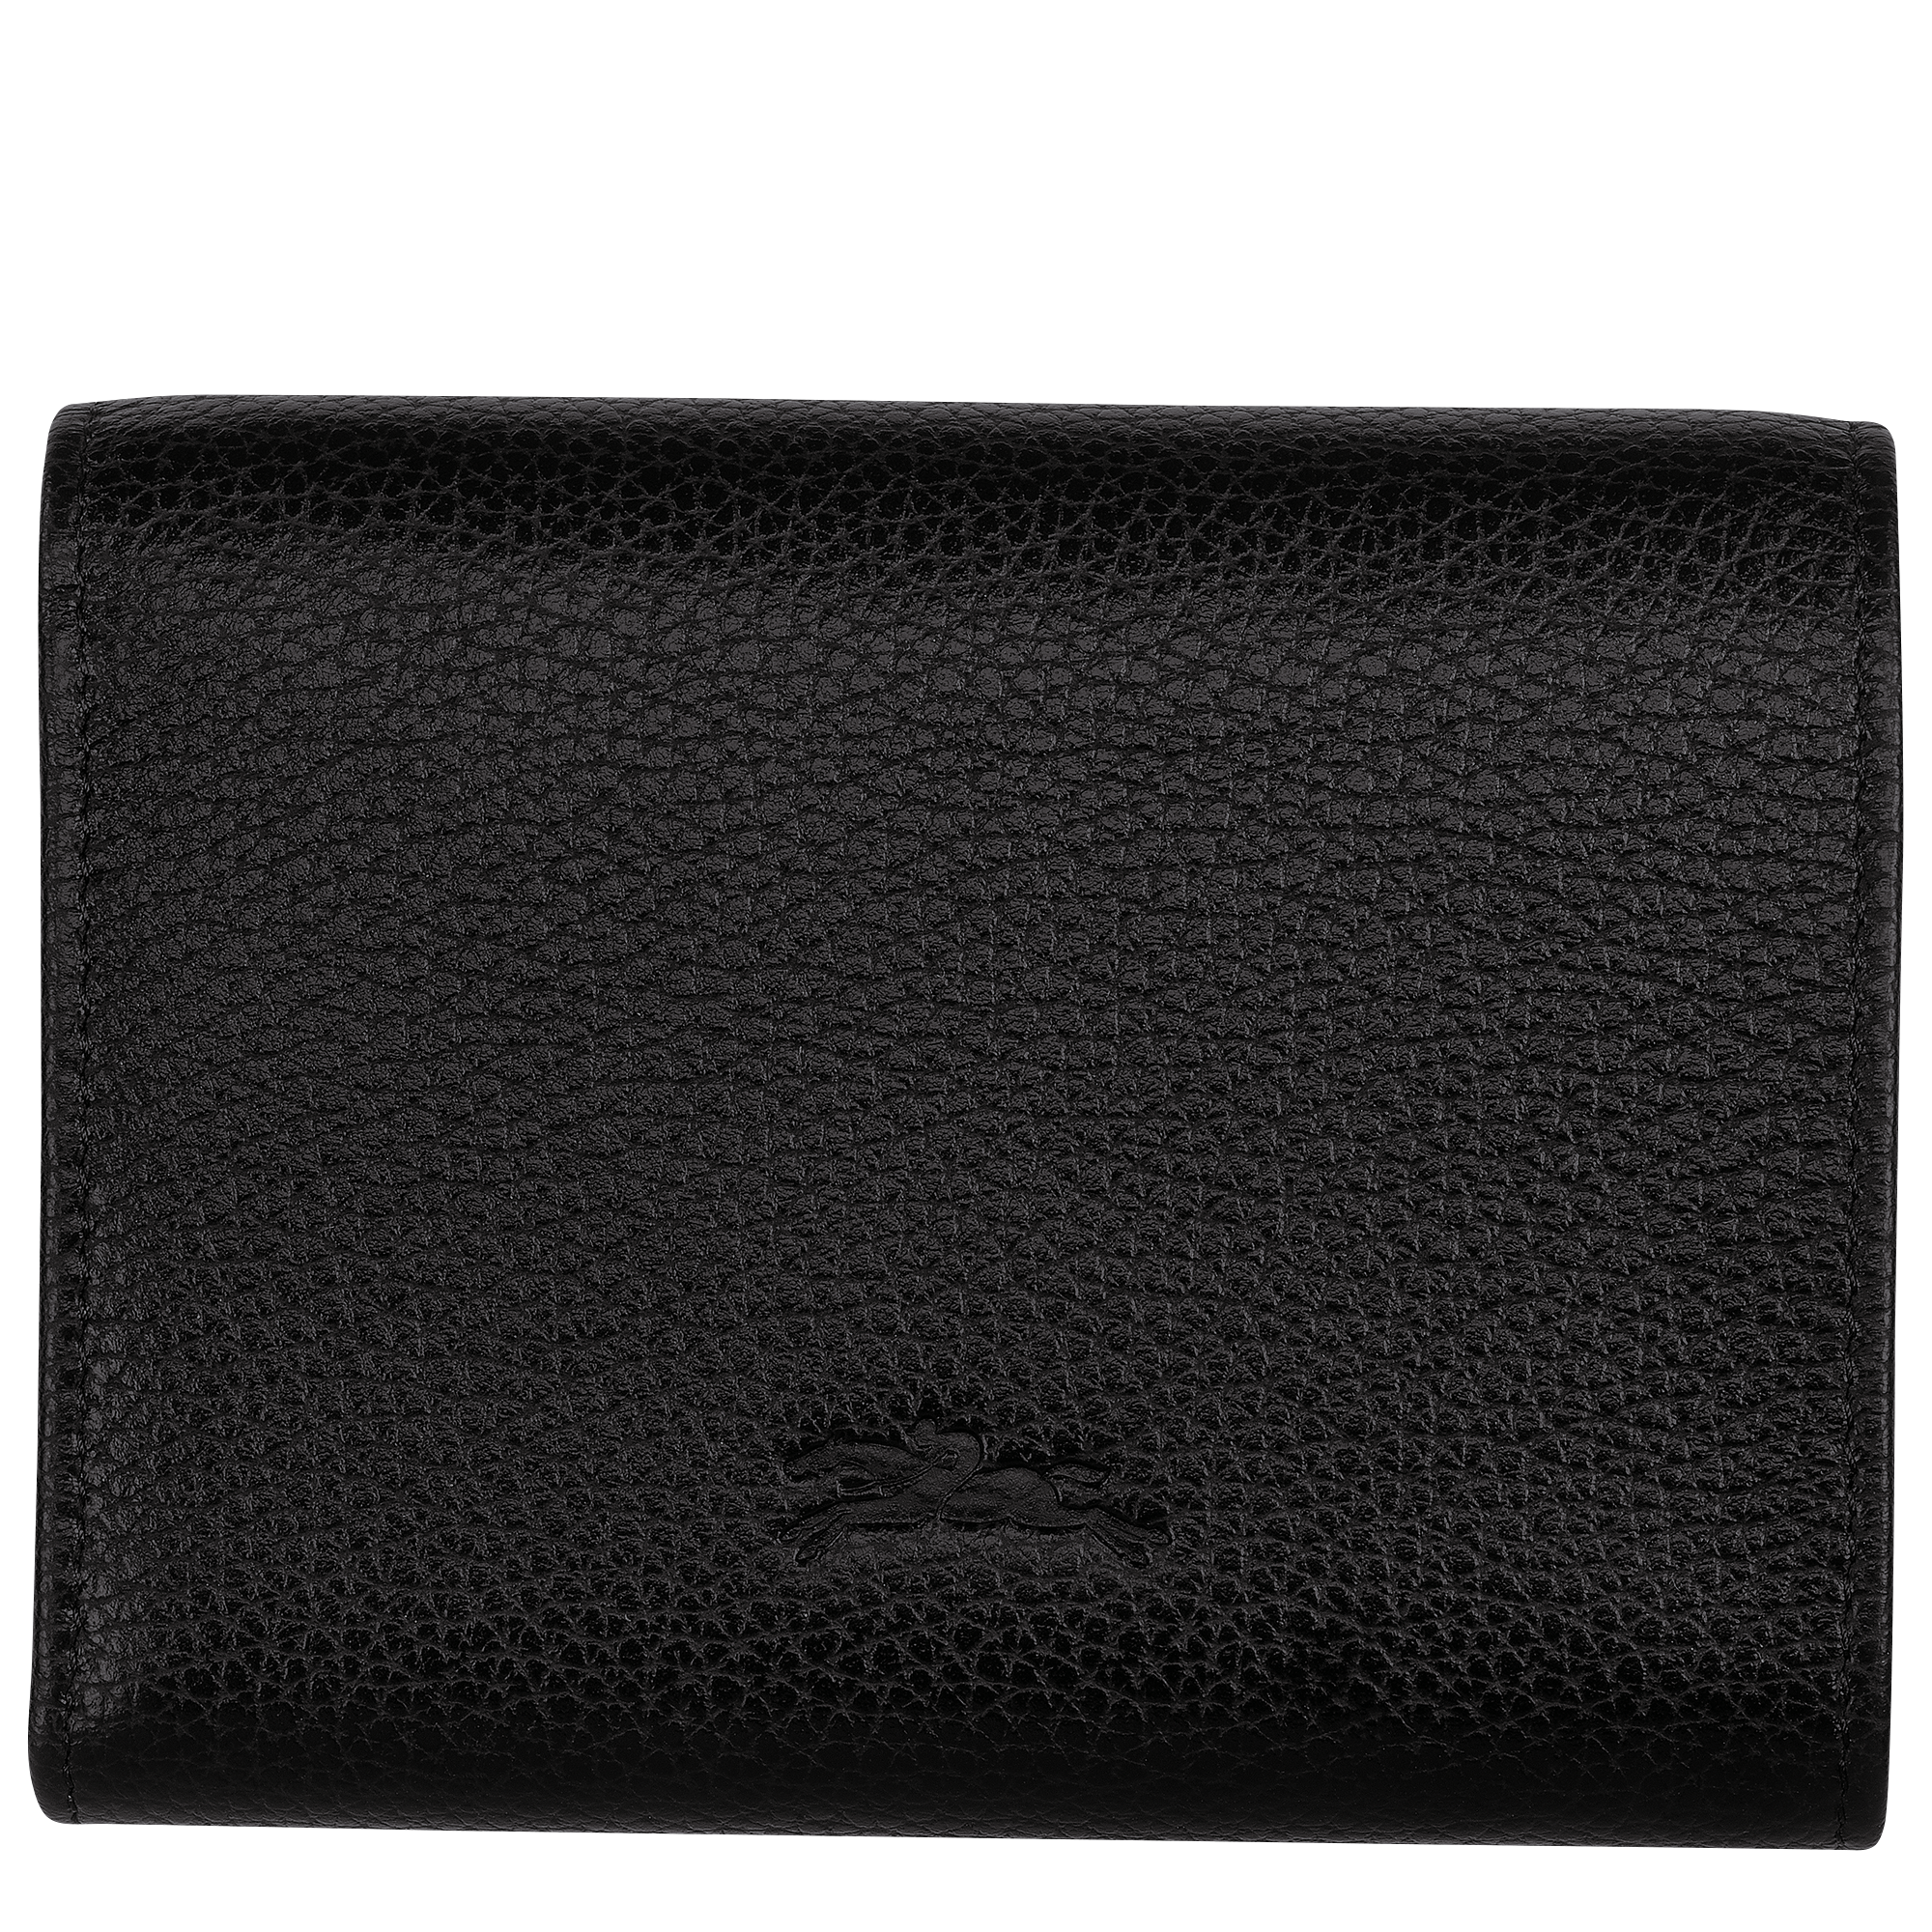 Le Foulonné Brieftasche im Kompaktformat, Schwarz